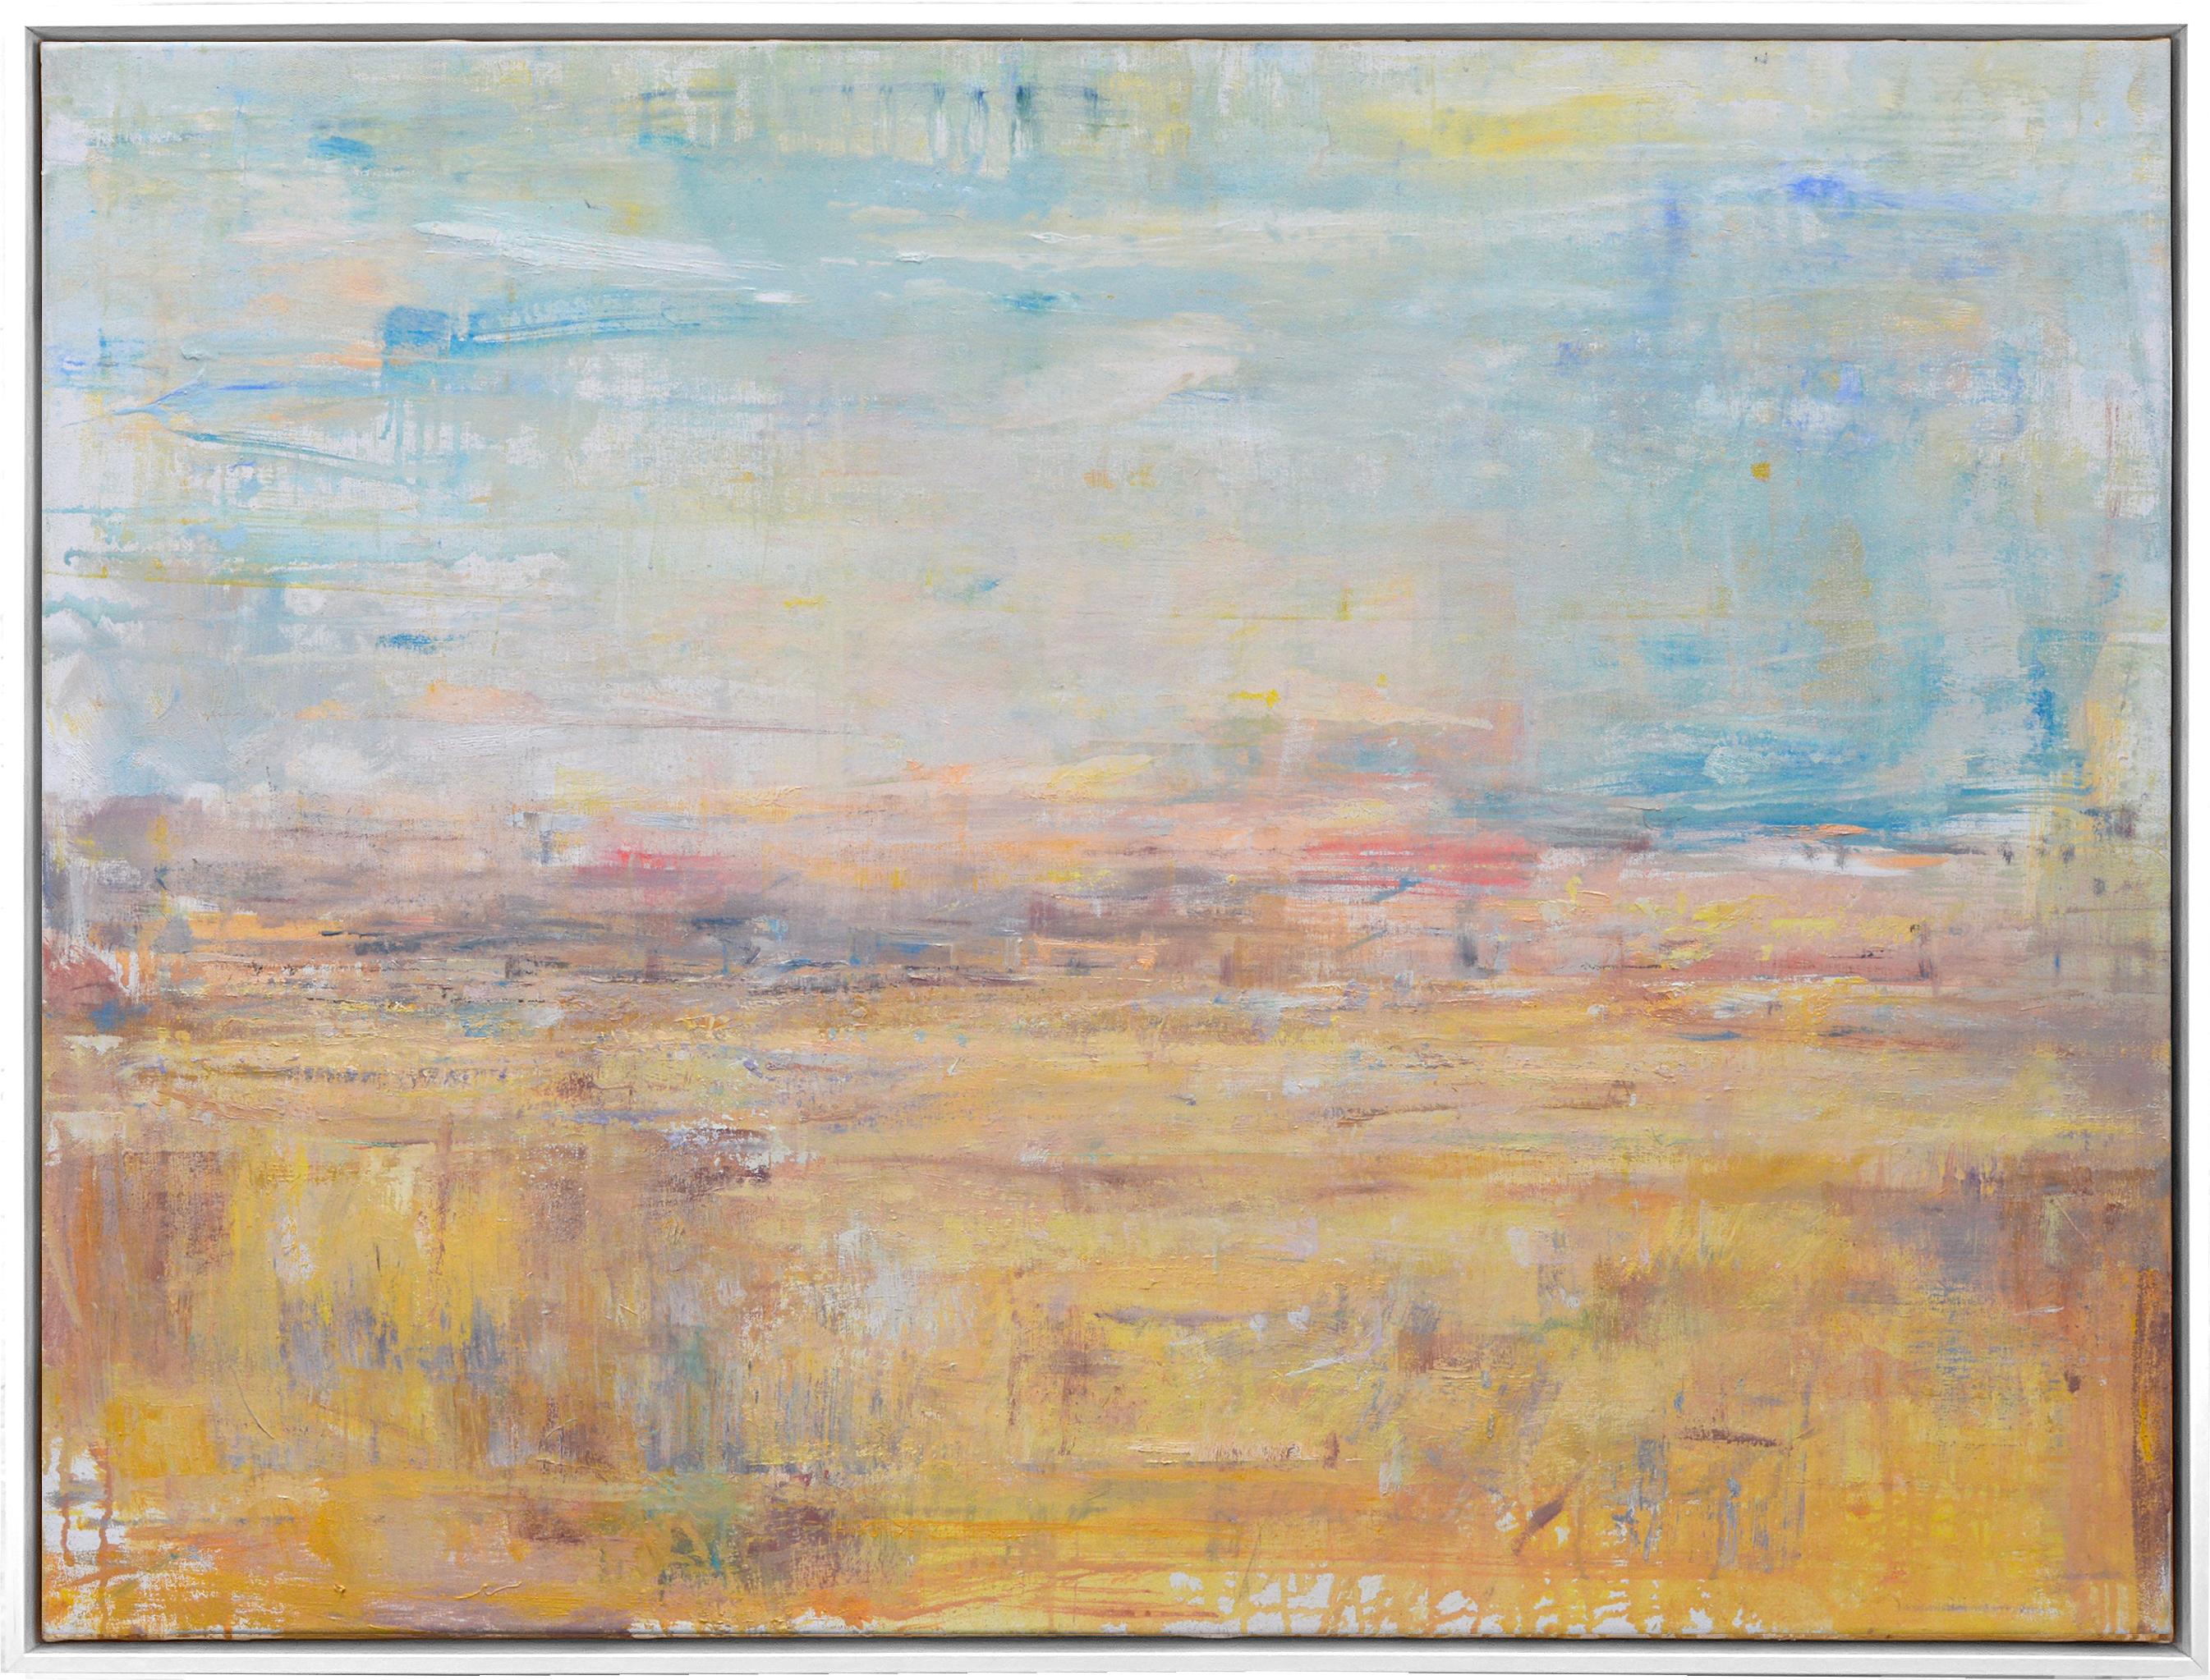 Gloria Sáez Landscape Painting - Gloria Saez, Paisaje, Oil on canvas, 2019